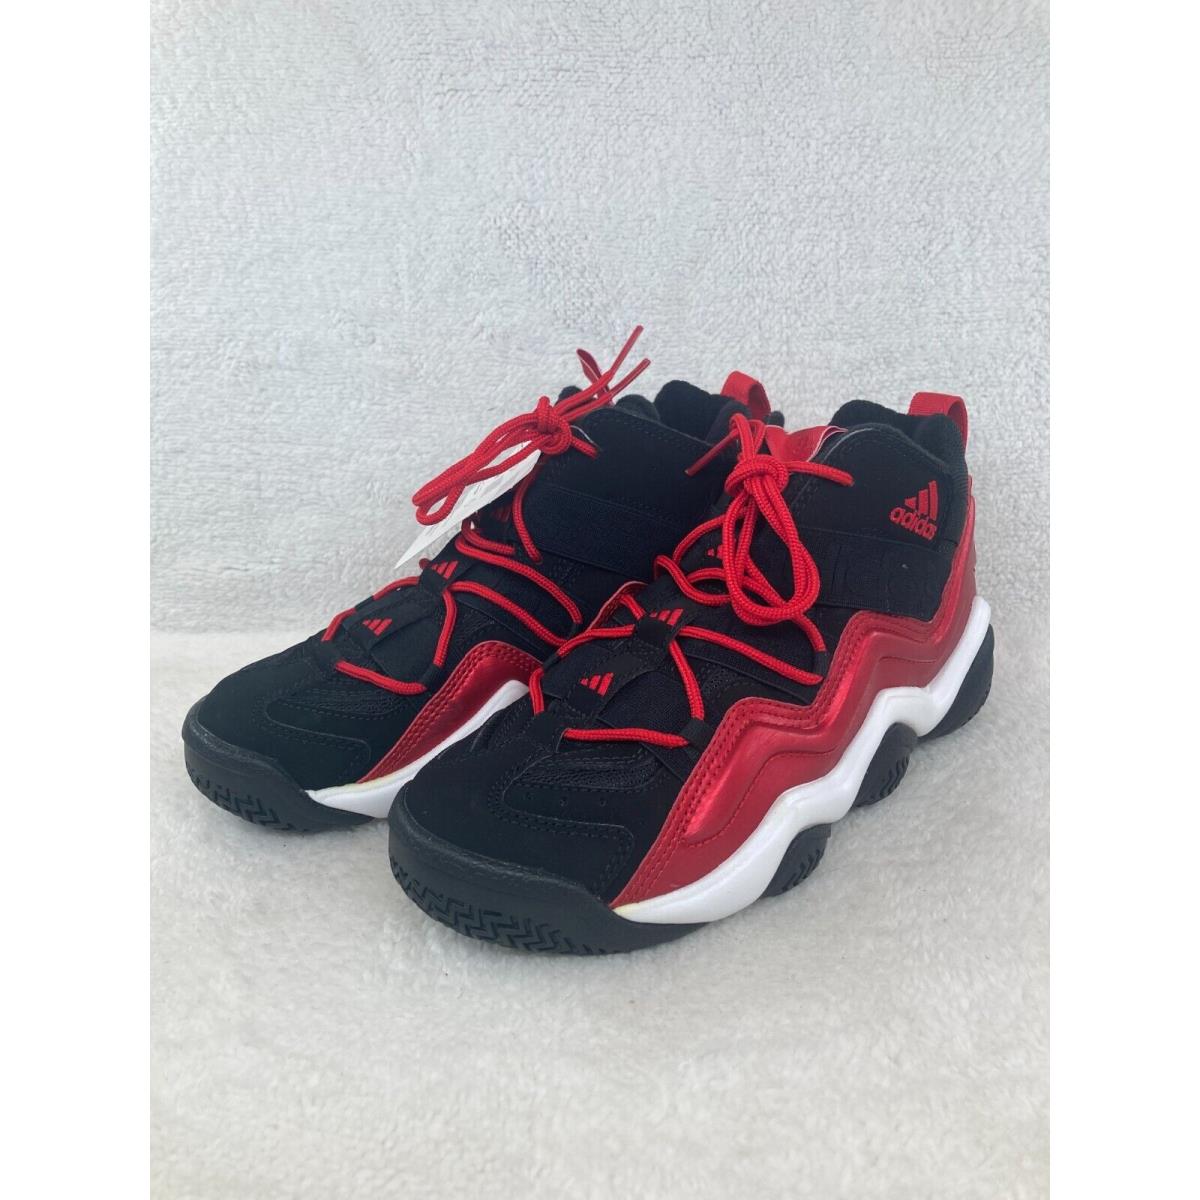 Adidas Top Ten 2000 J Youth Size 6 Basketball Shoe Sneaker Black Red